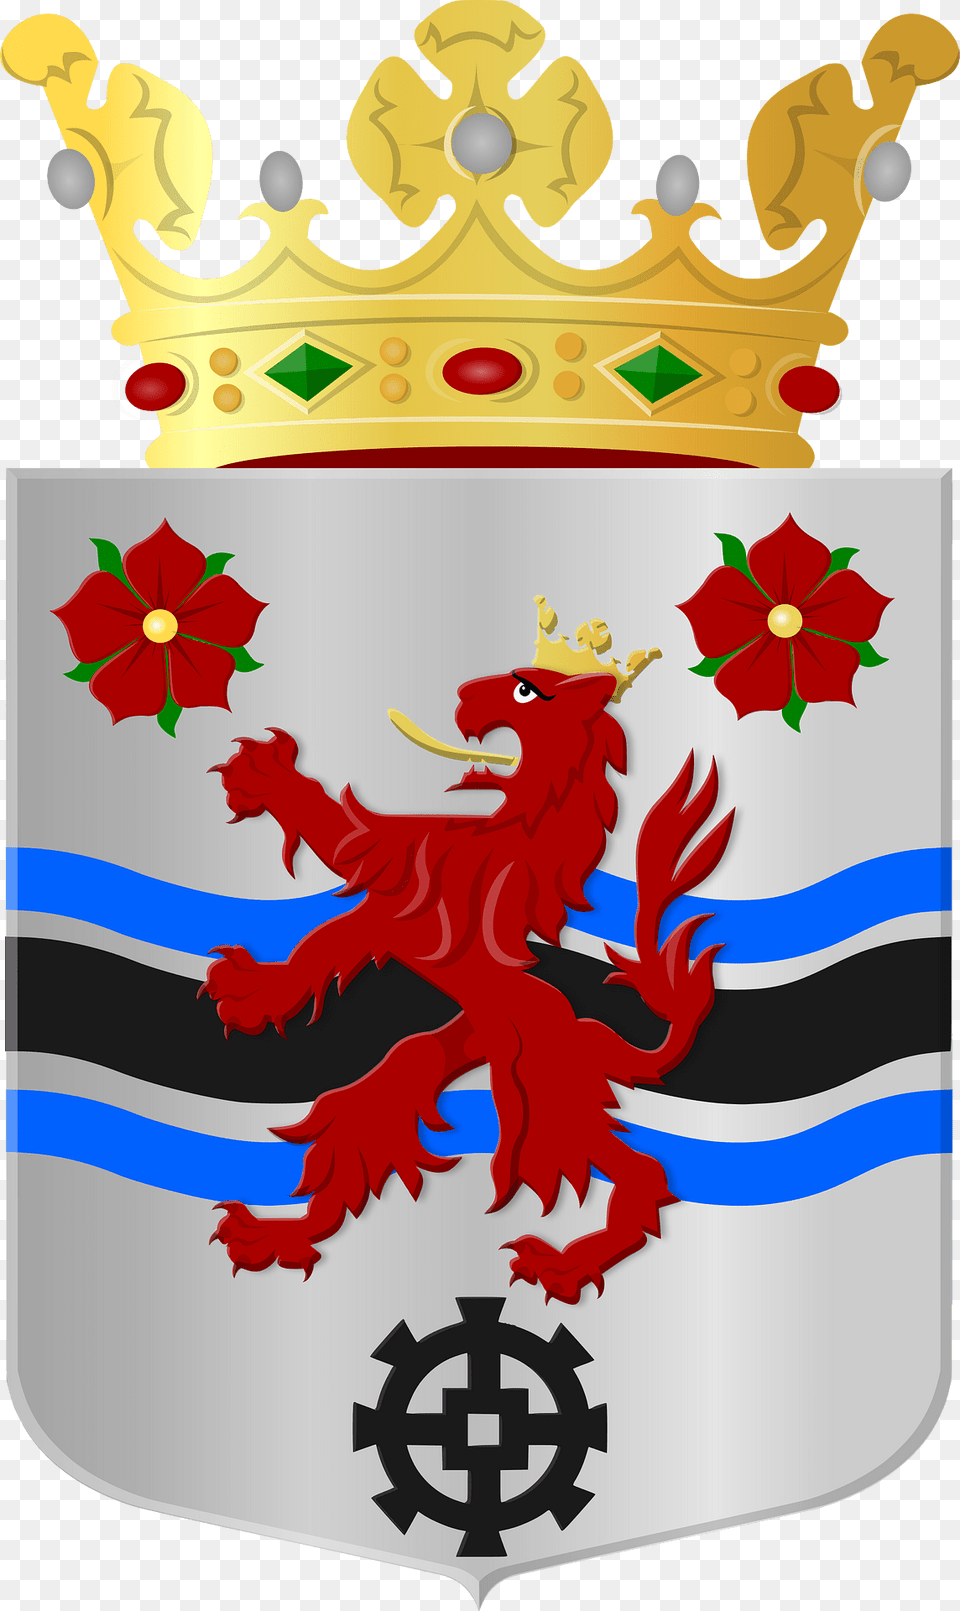 Zuiveringschap Oostelijk Gelderland Wapen Clipart, Emblem, Symbol Free Transparent Png